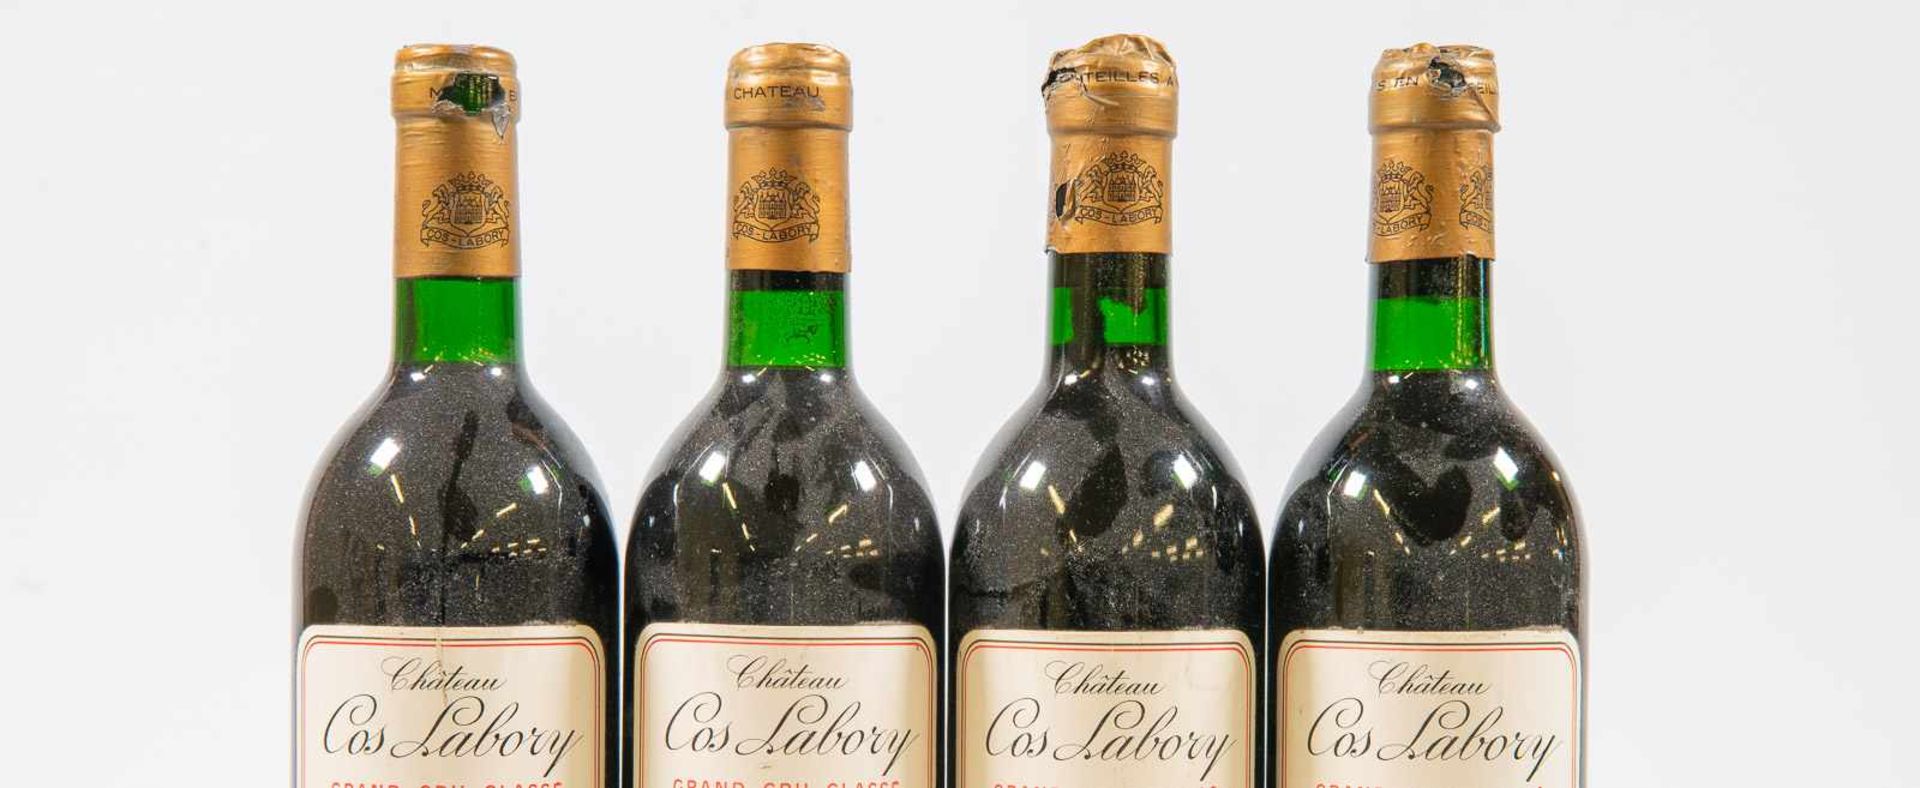 Chateau Cos Labory, 1985, 4 bottles Length: 0 cm , Width: 0 cm, Hight: 0 cm, Diameter: 0 cm - Image 2 of 3